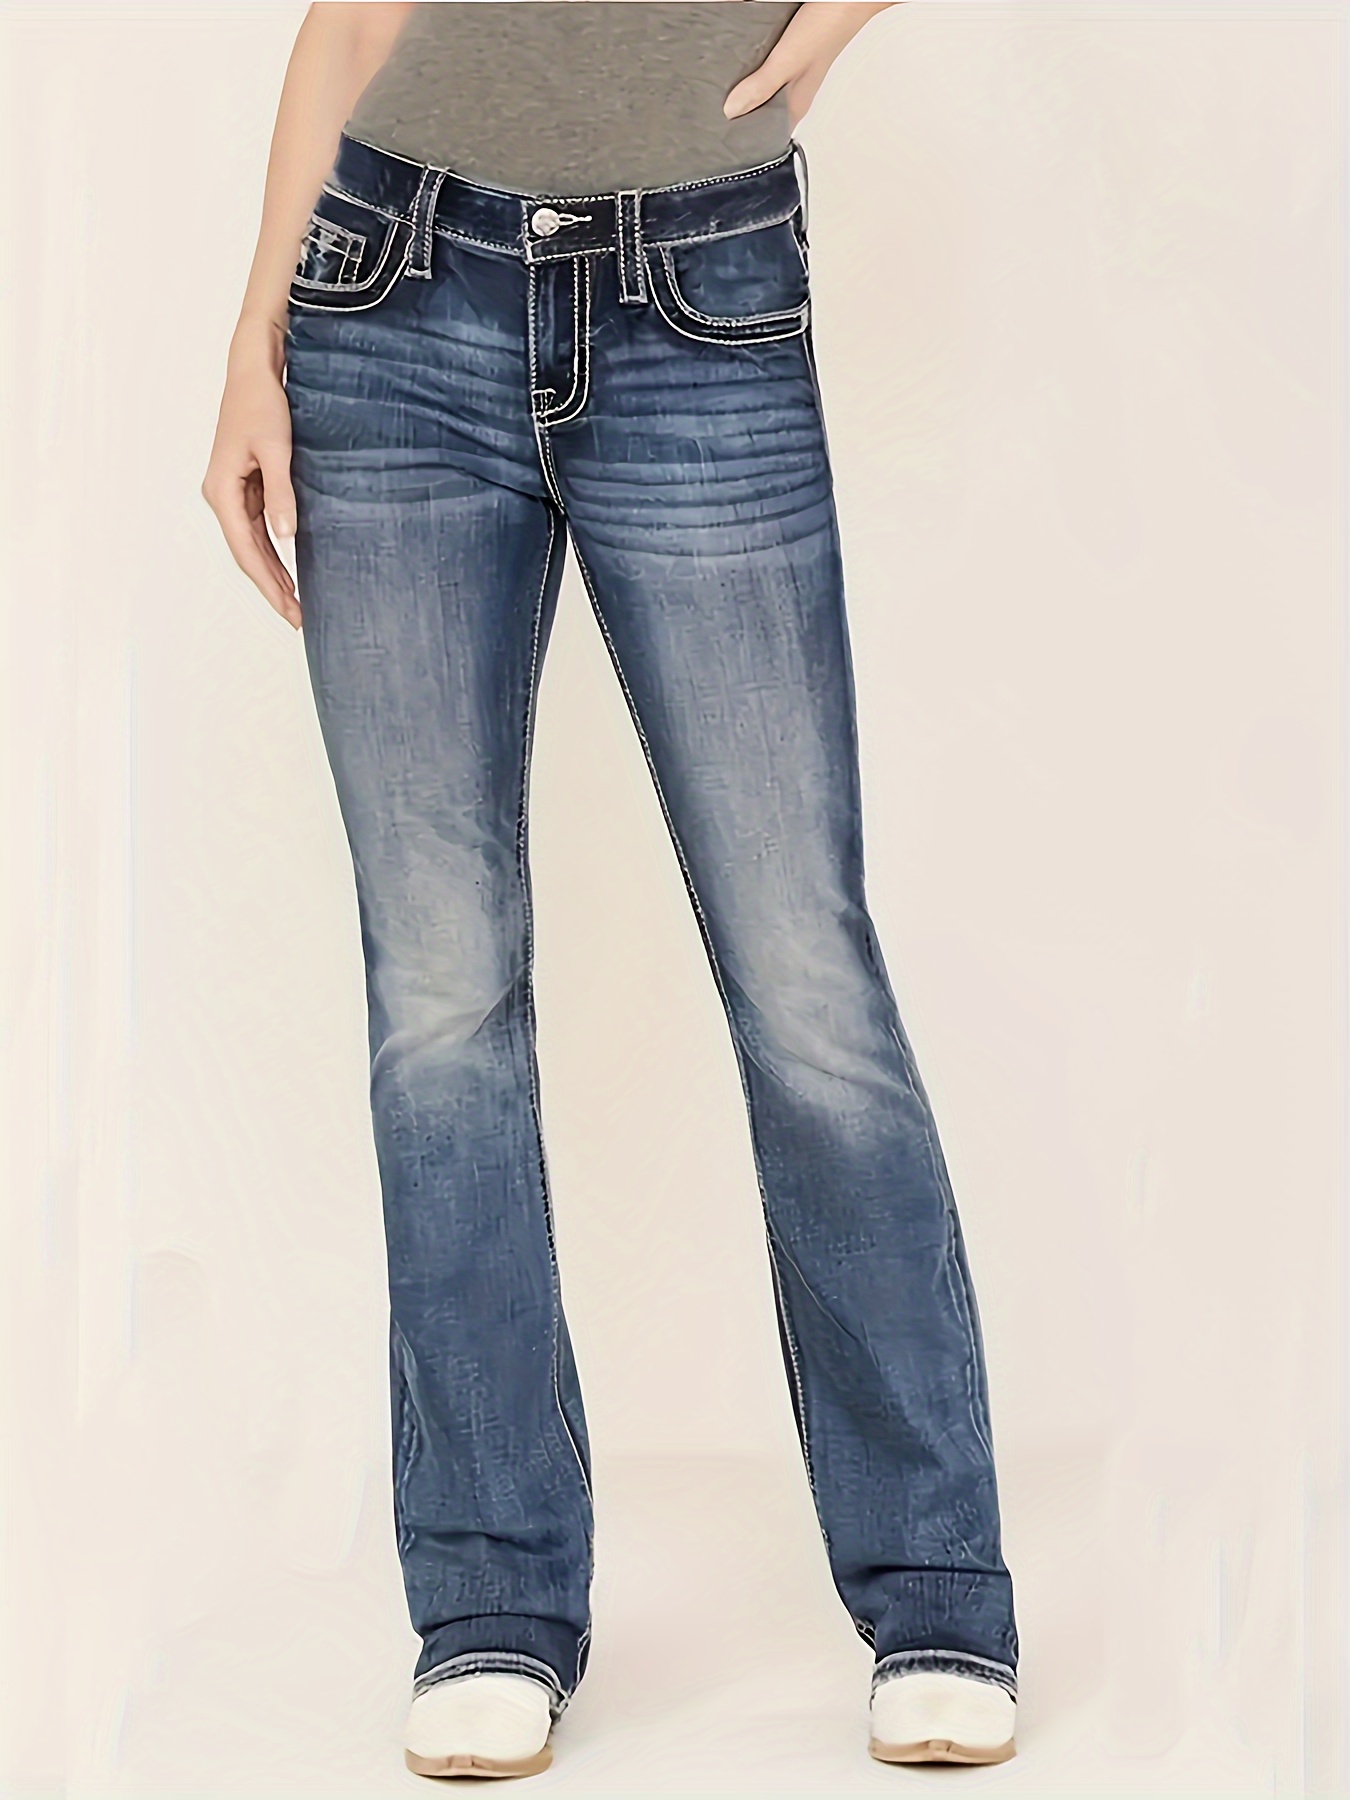 Y2K Mudd Bootcut Jeans Women's size 7 Medium Wash Red Stitching